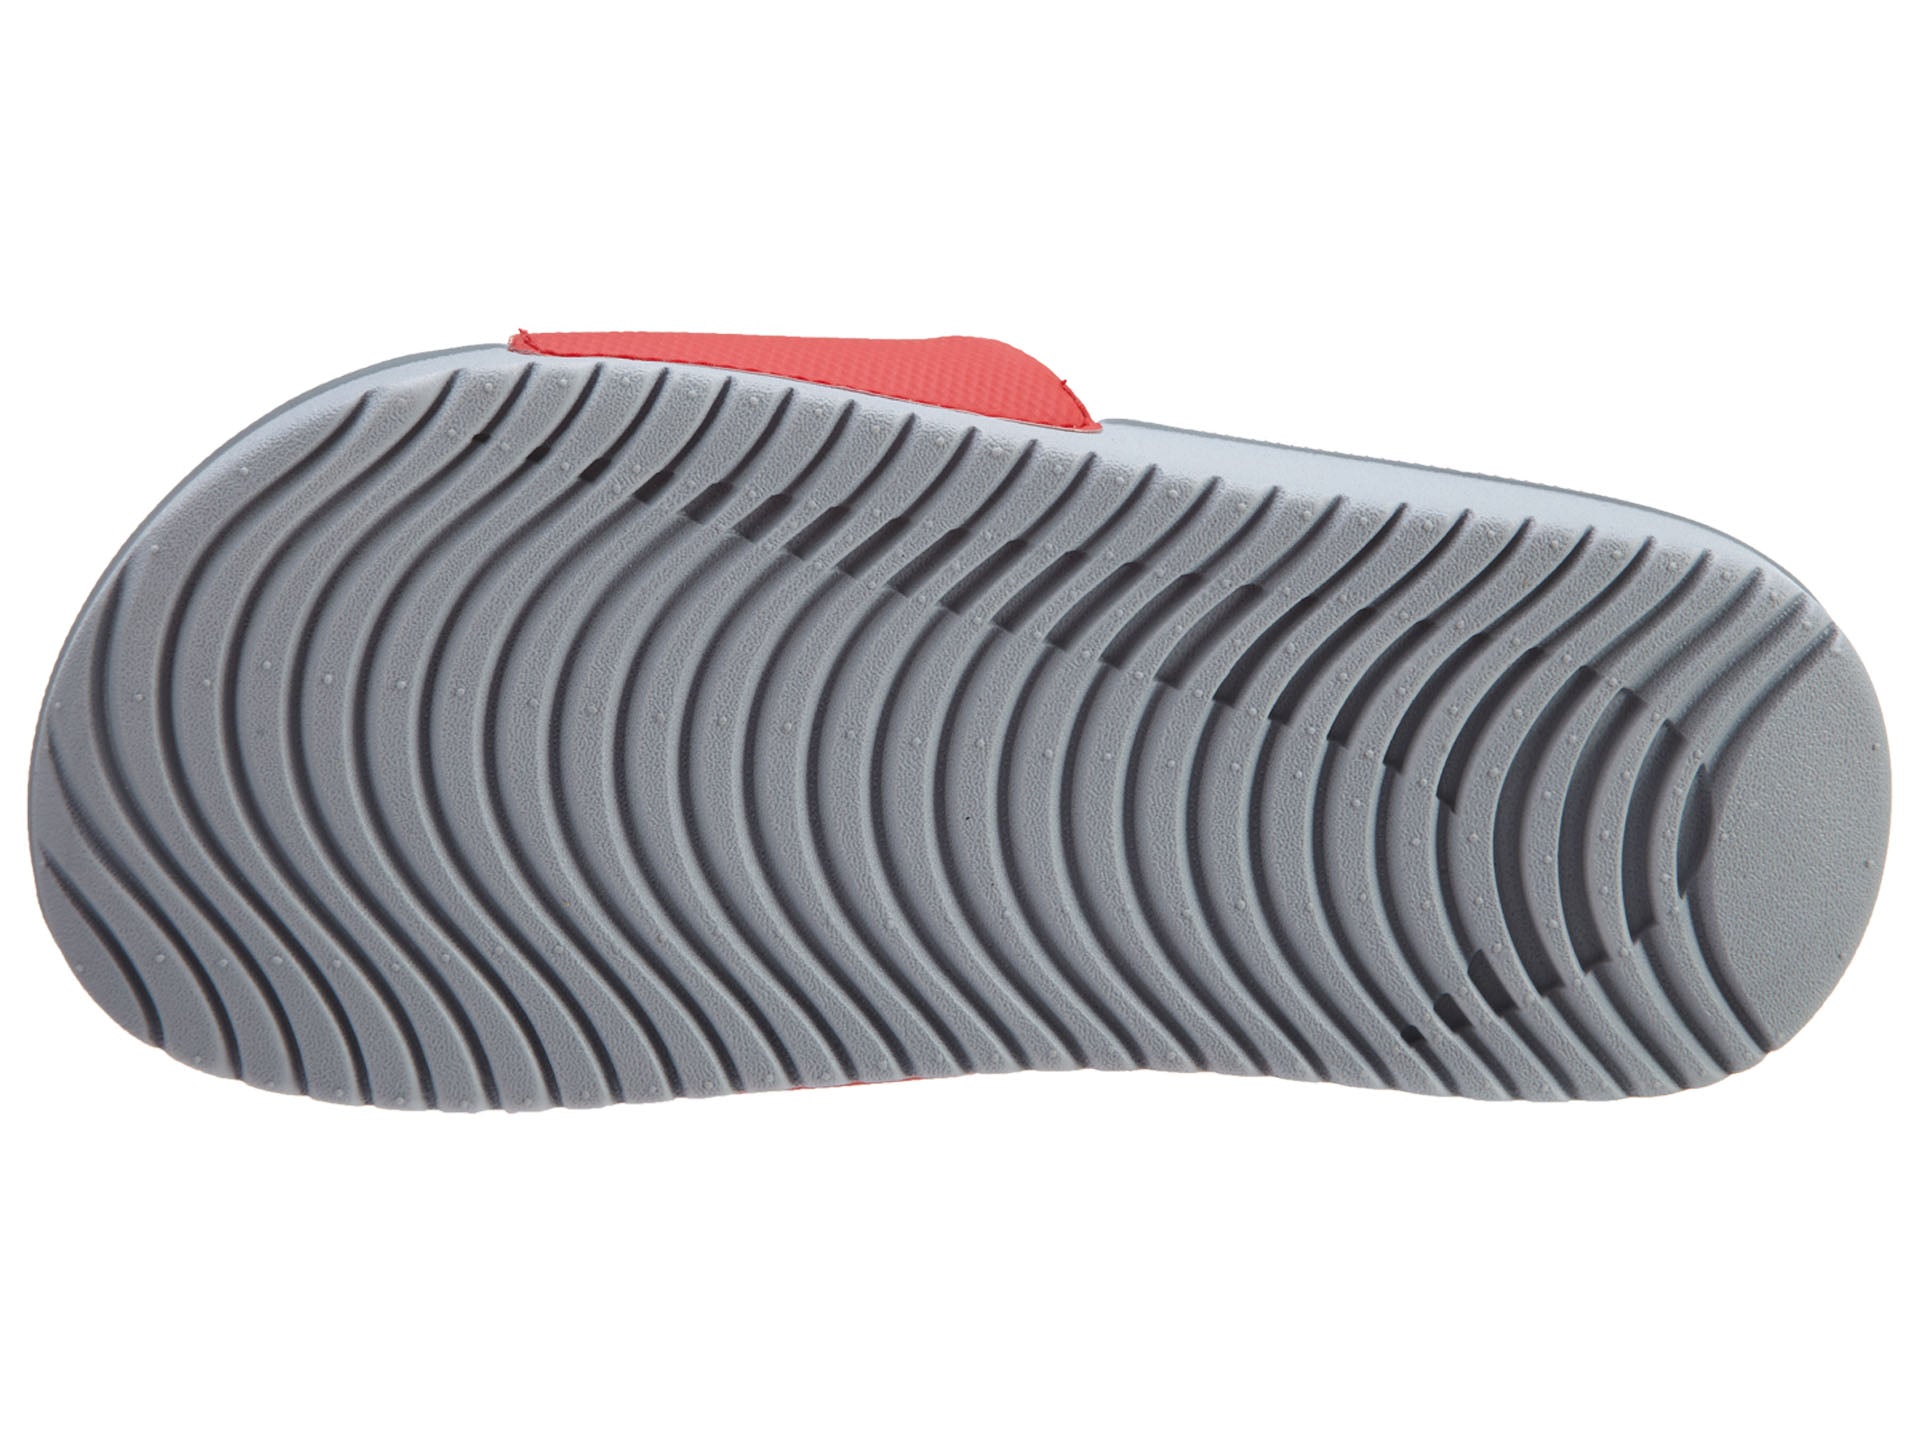 Nike Kawa Slide Sandal GS/PS University Red Boys / Girls Style :819352